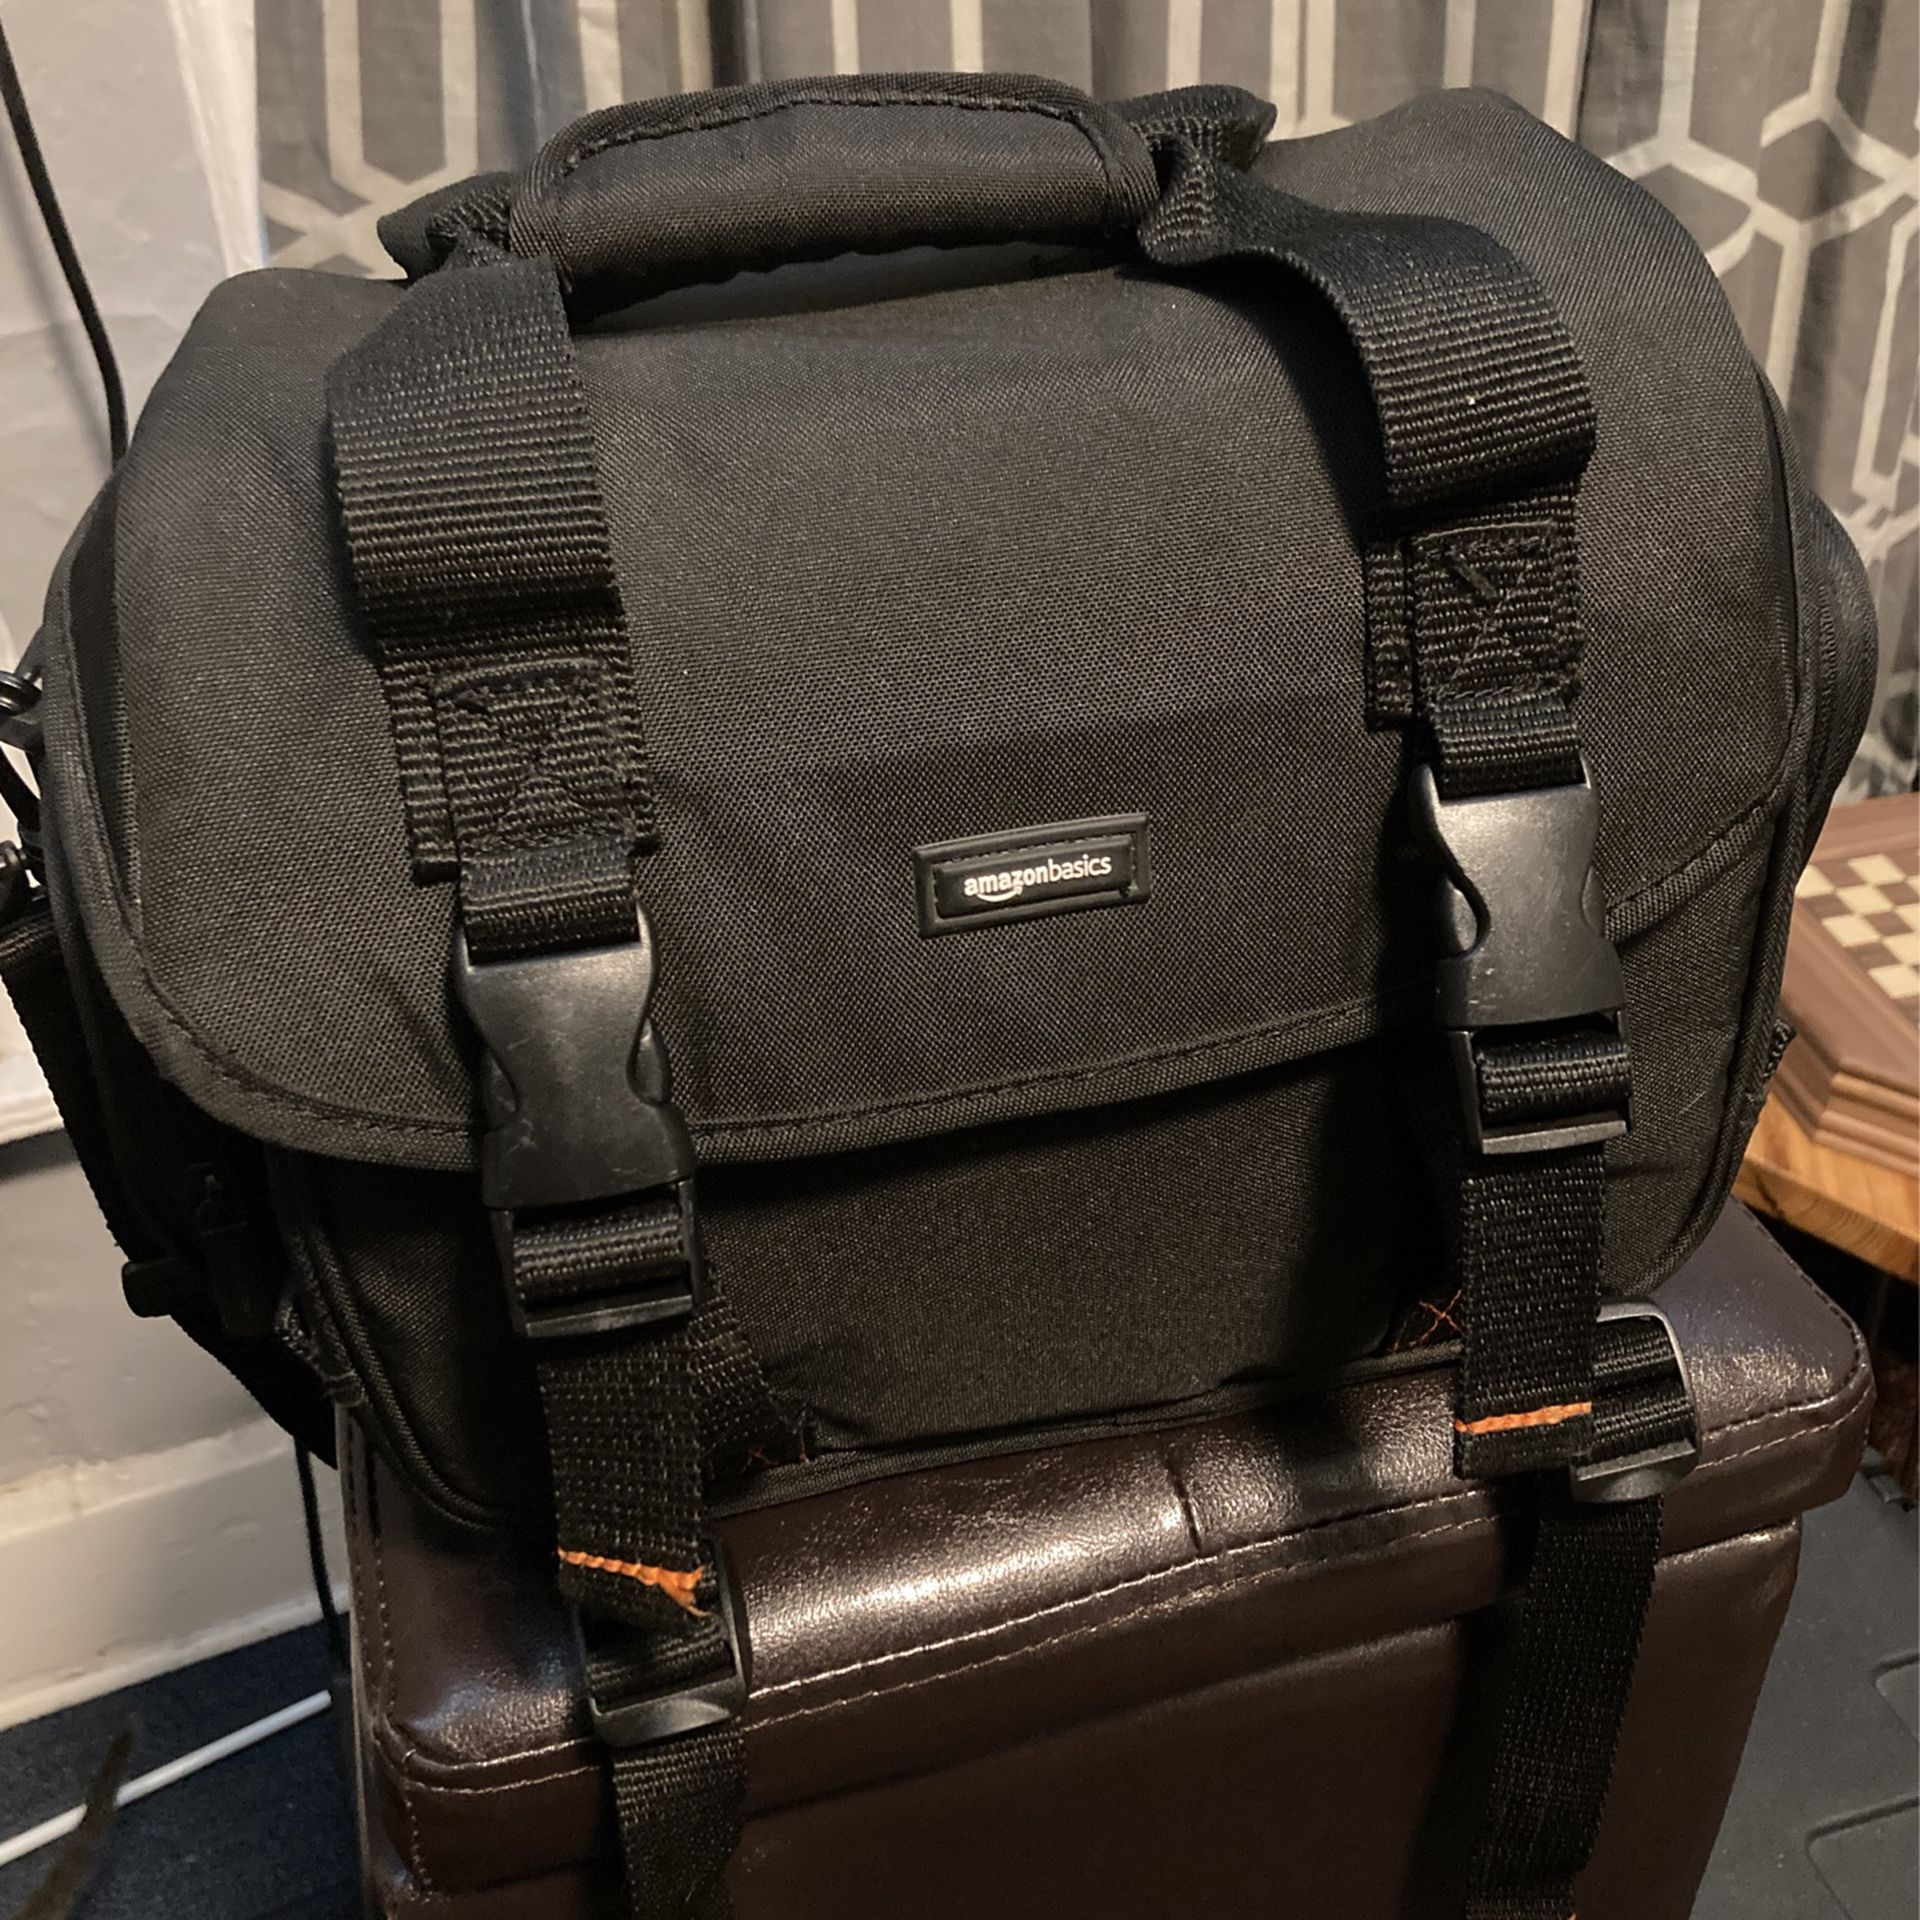 Amazon Basics Camera Bag